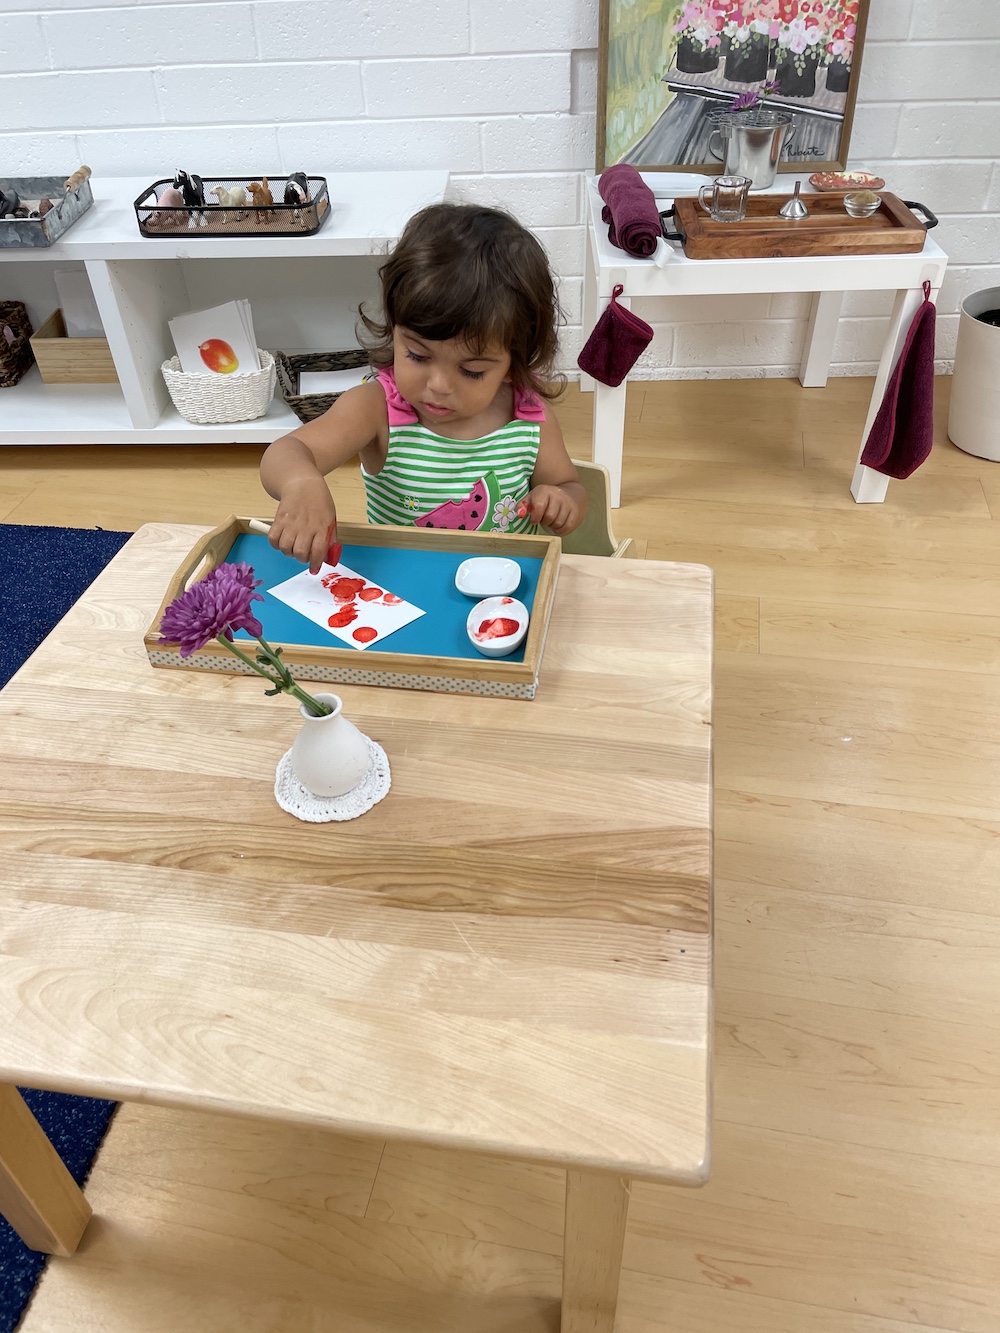 Is Montessori Education Effective?